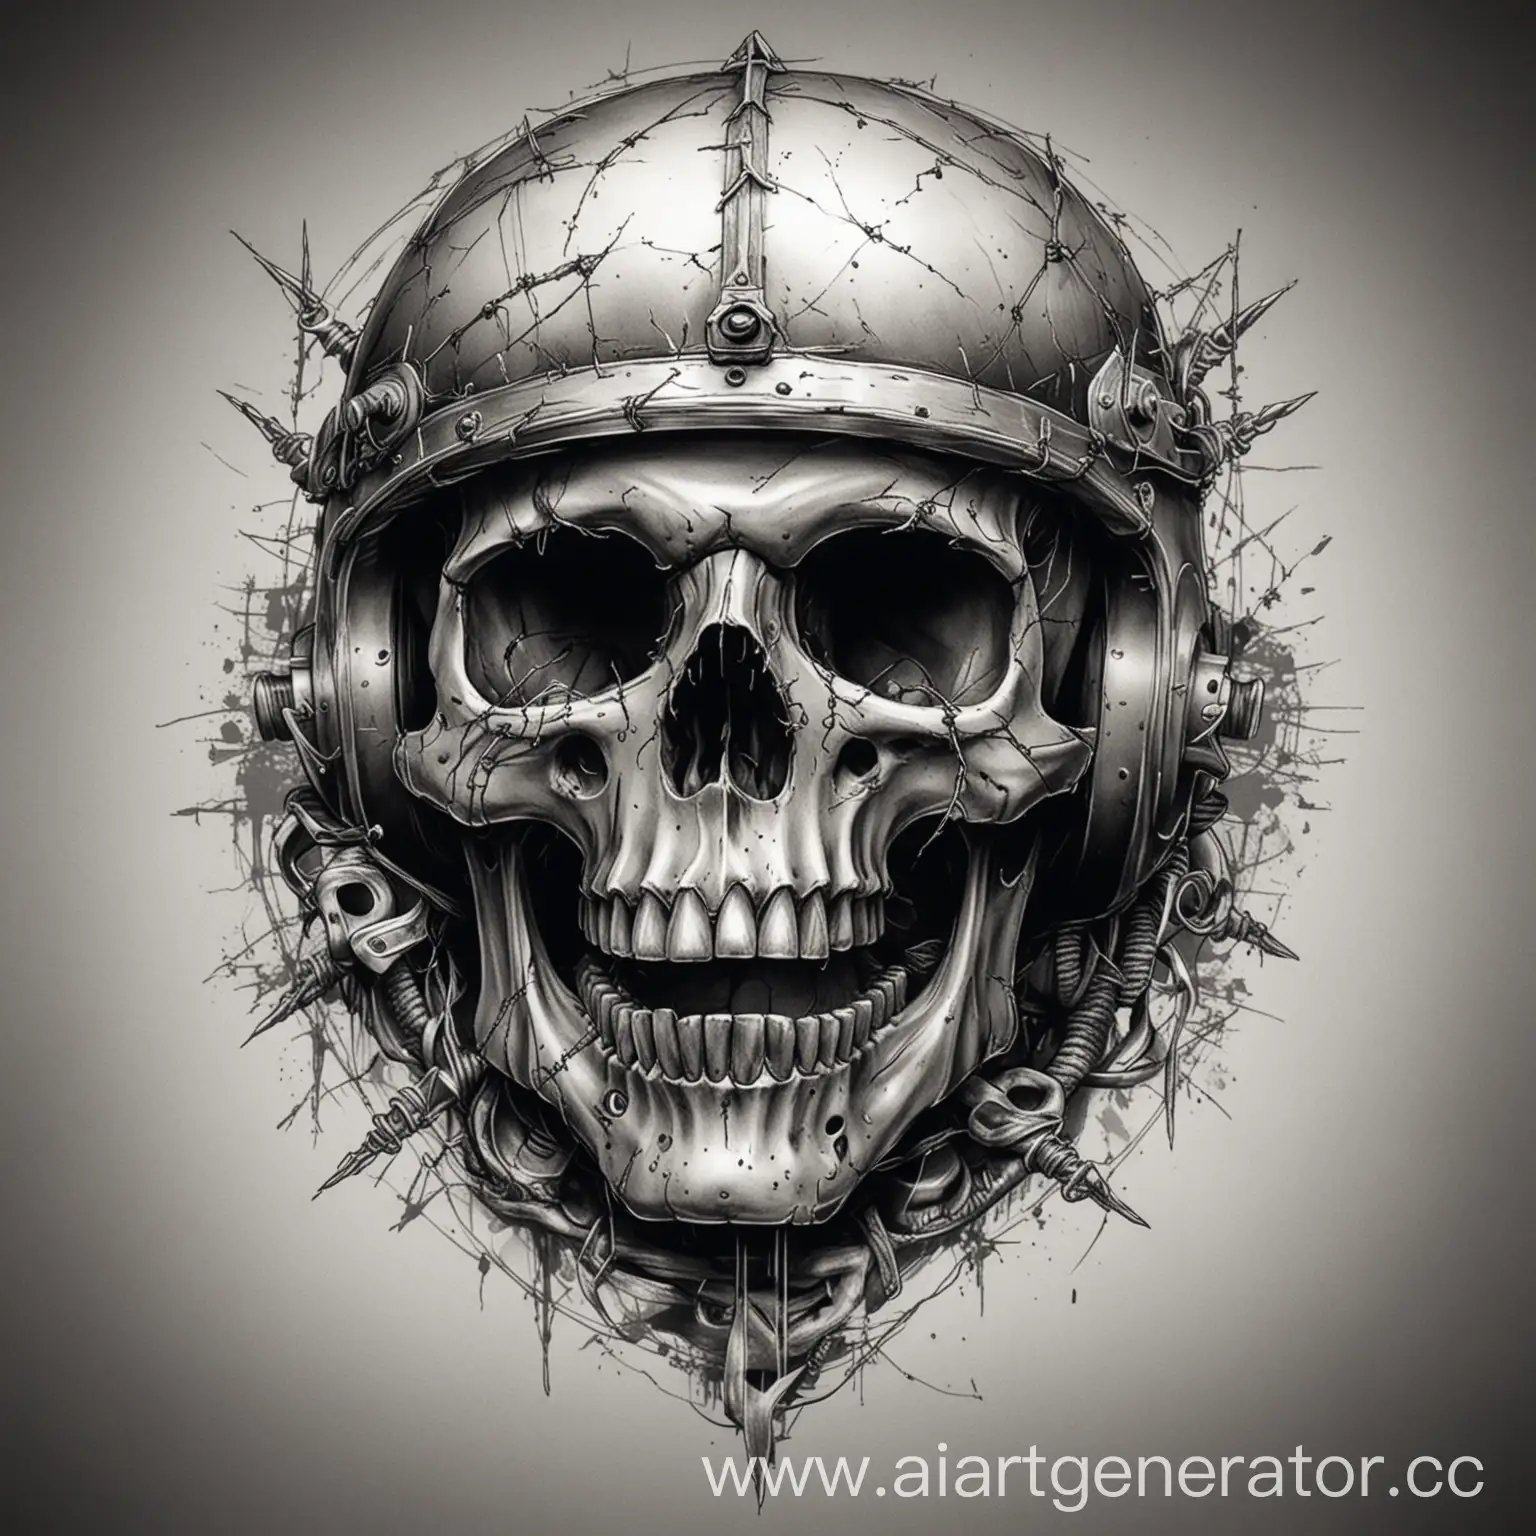 Skull-Tattoo-Art-Tank-Helmet-and-Barbed-Wire-Design